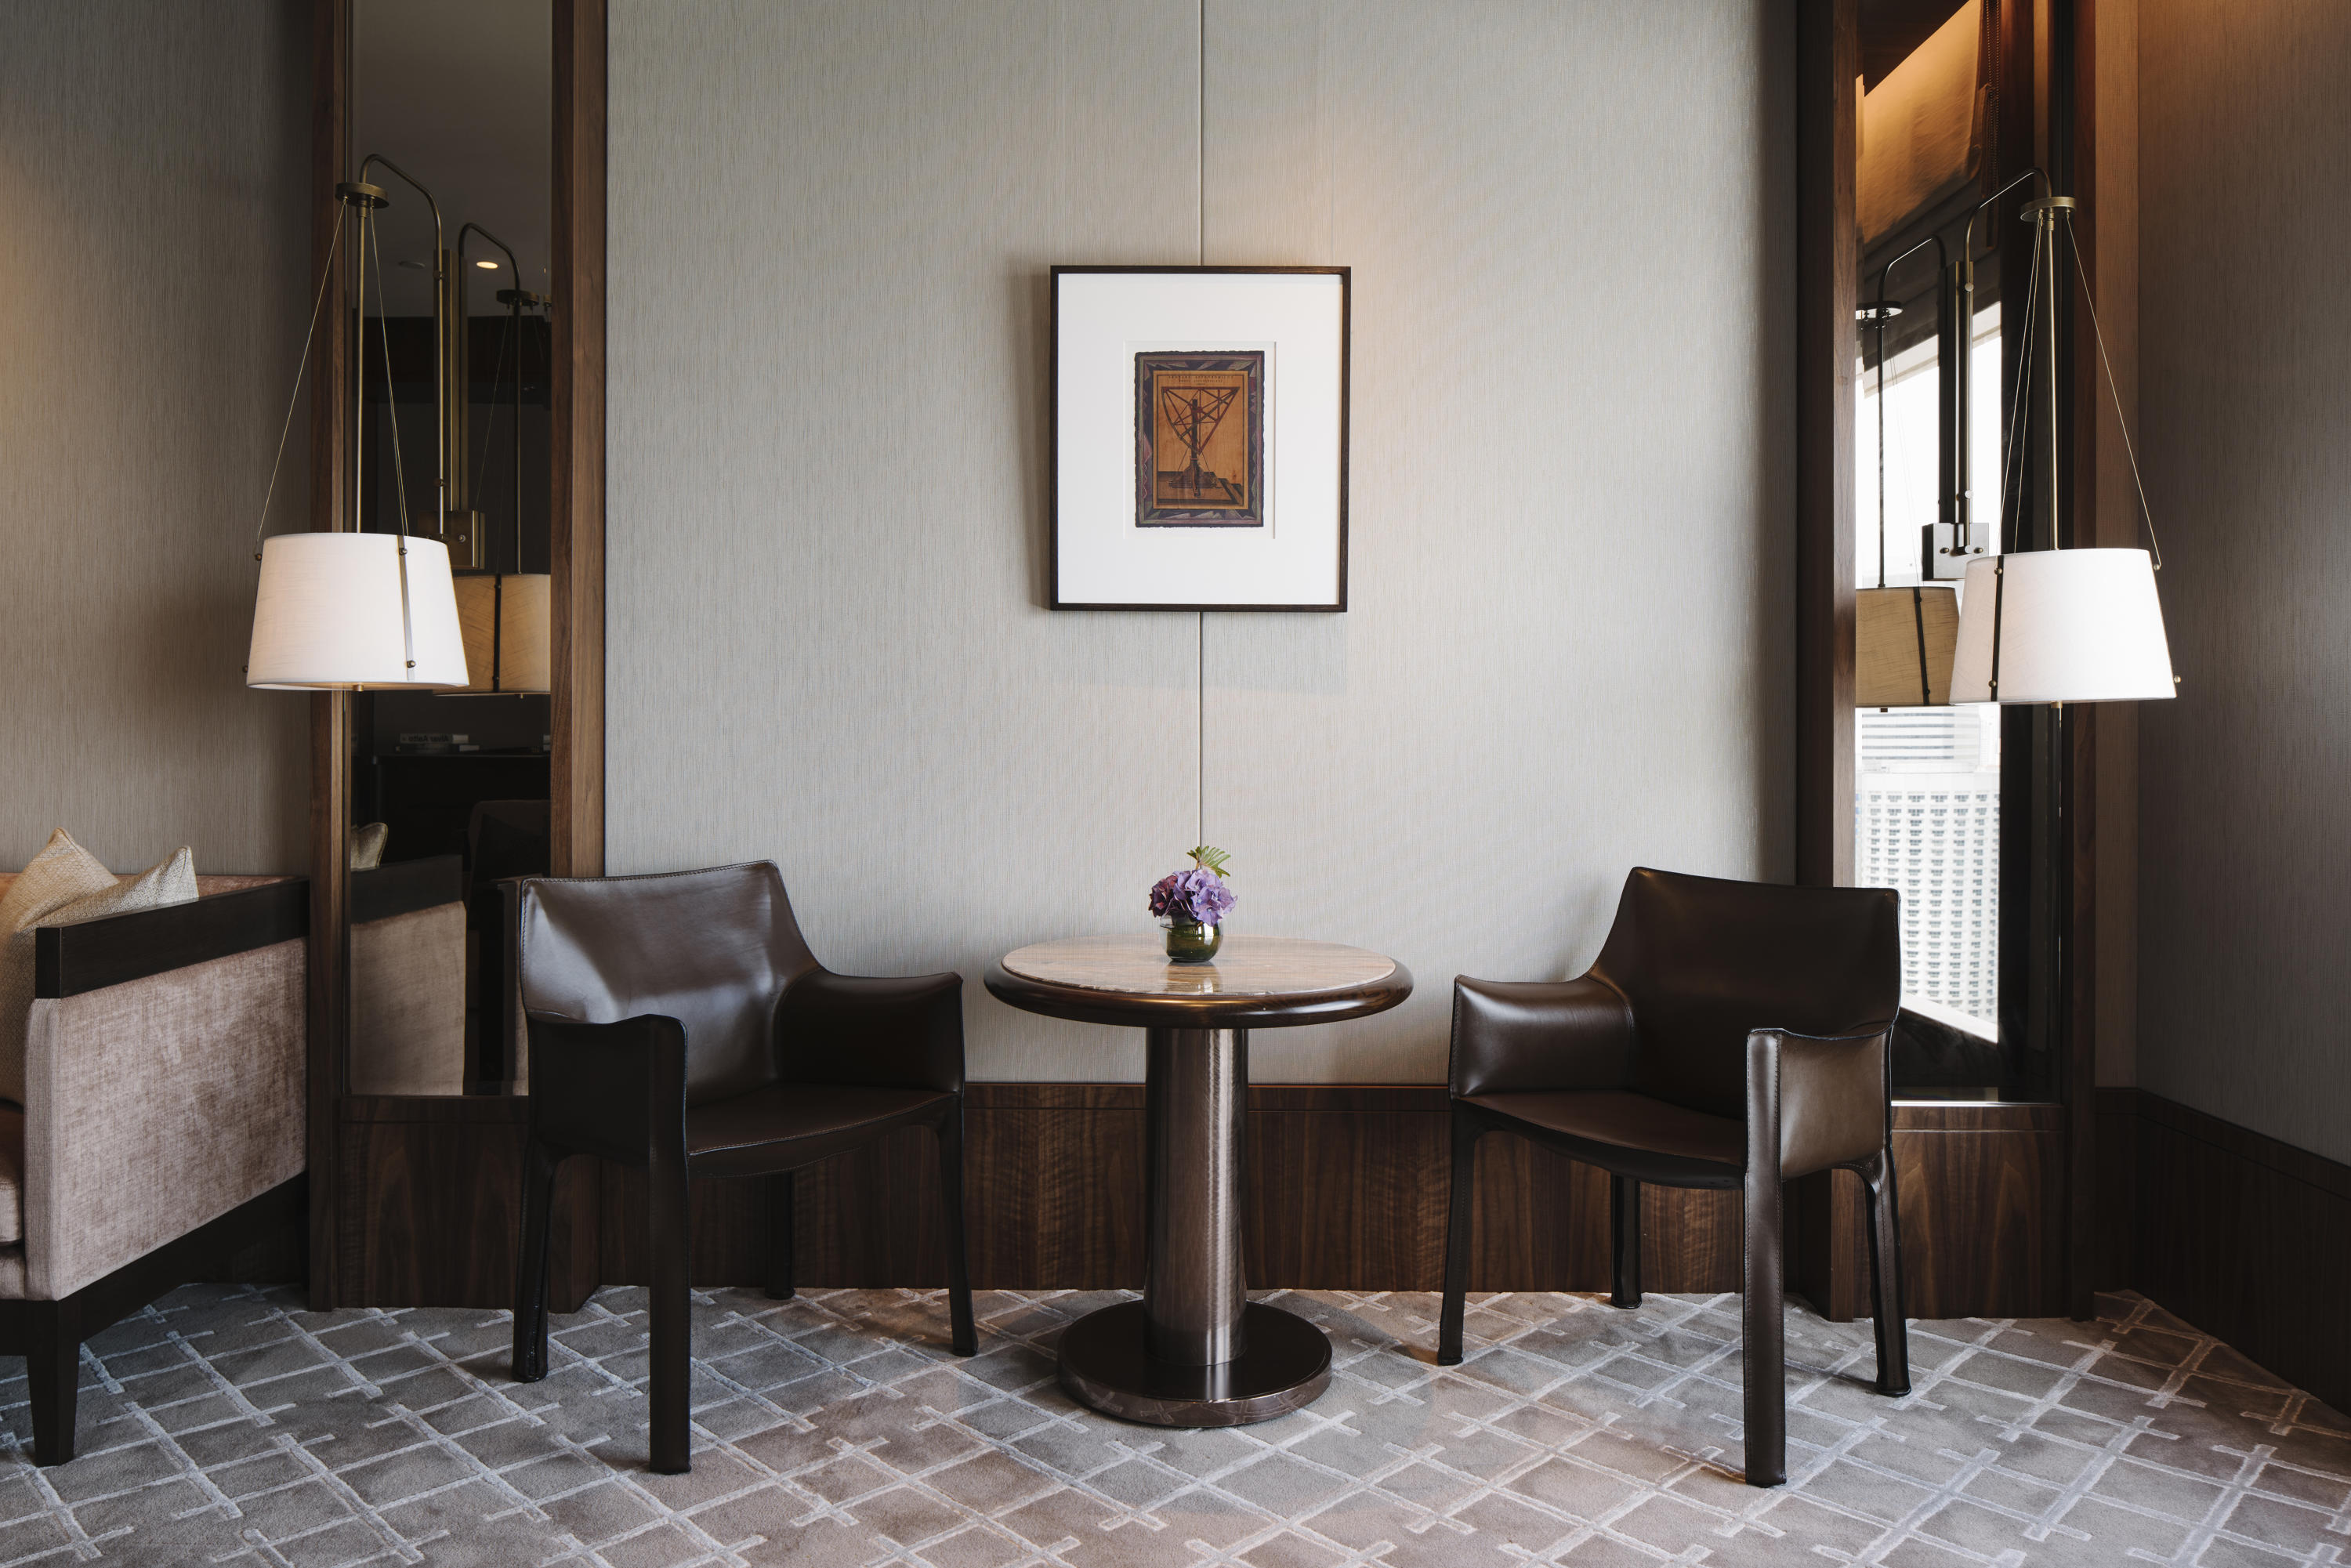 Executive Lounge, Conrad Hotel by Brewin Design Office